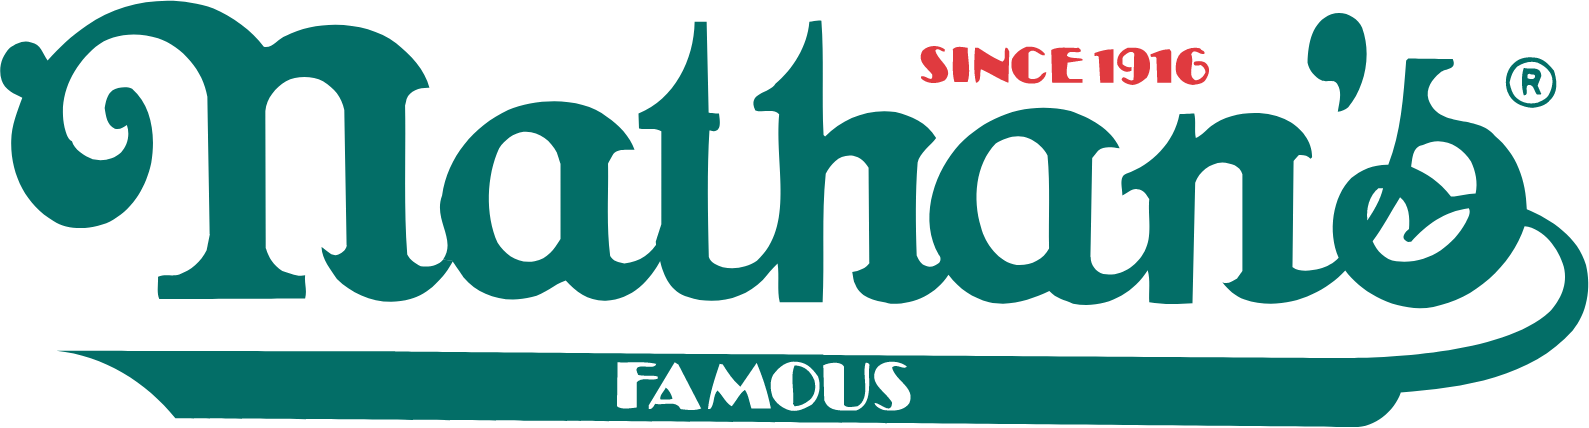 Nathan's Famous logo large (transparent PNG)